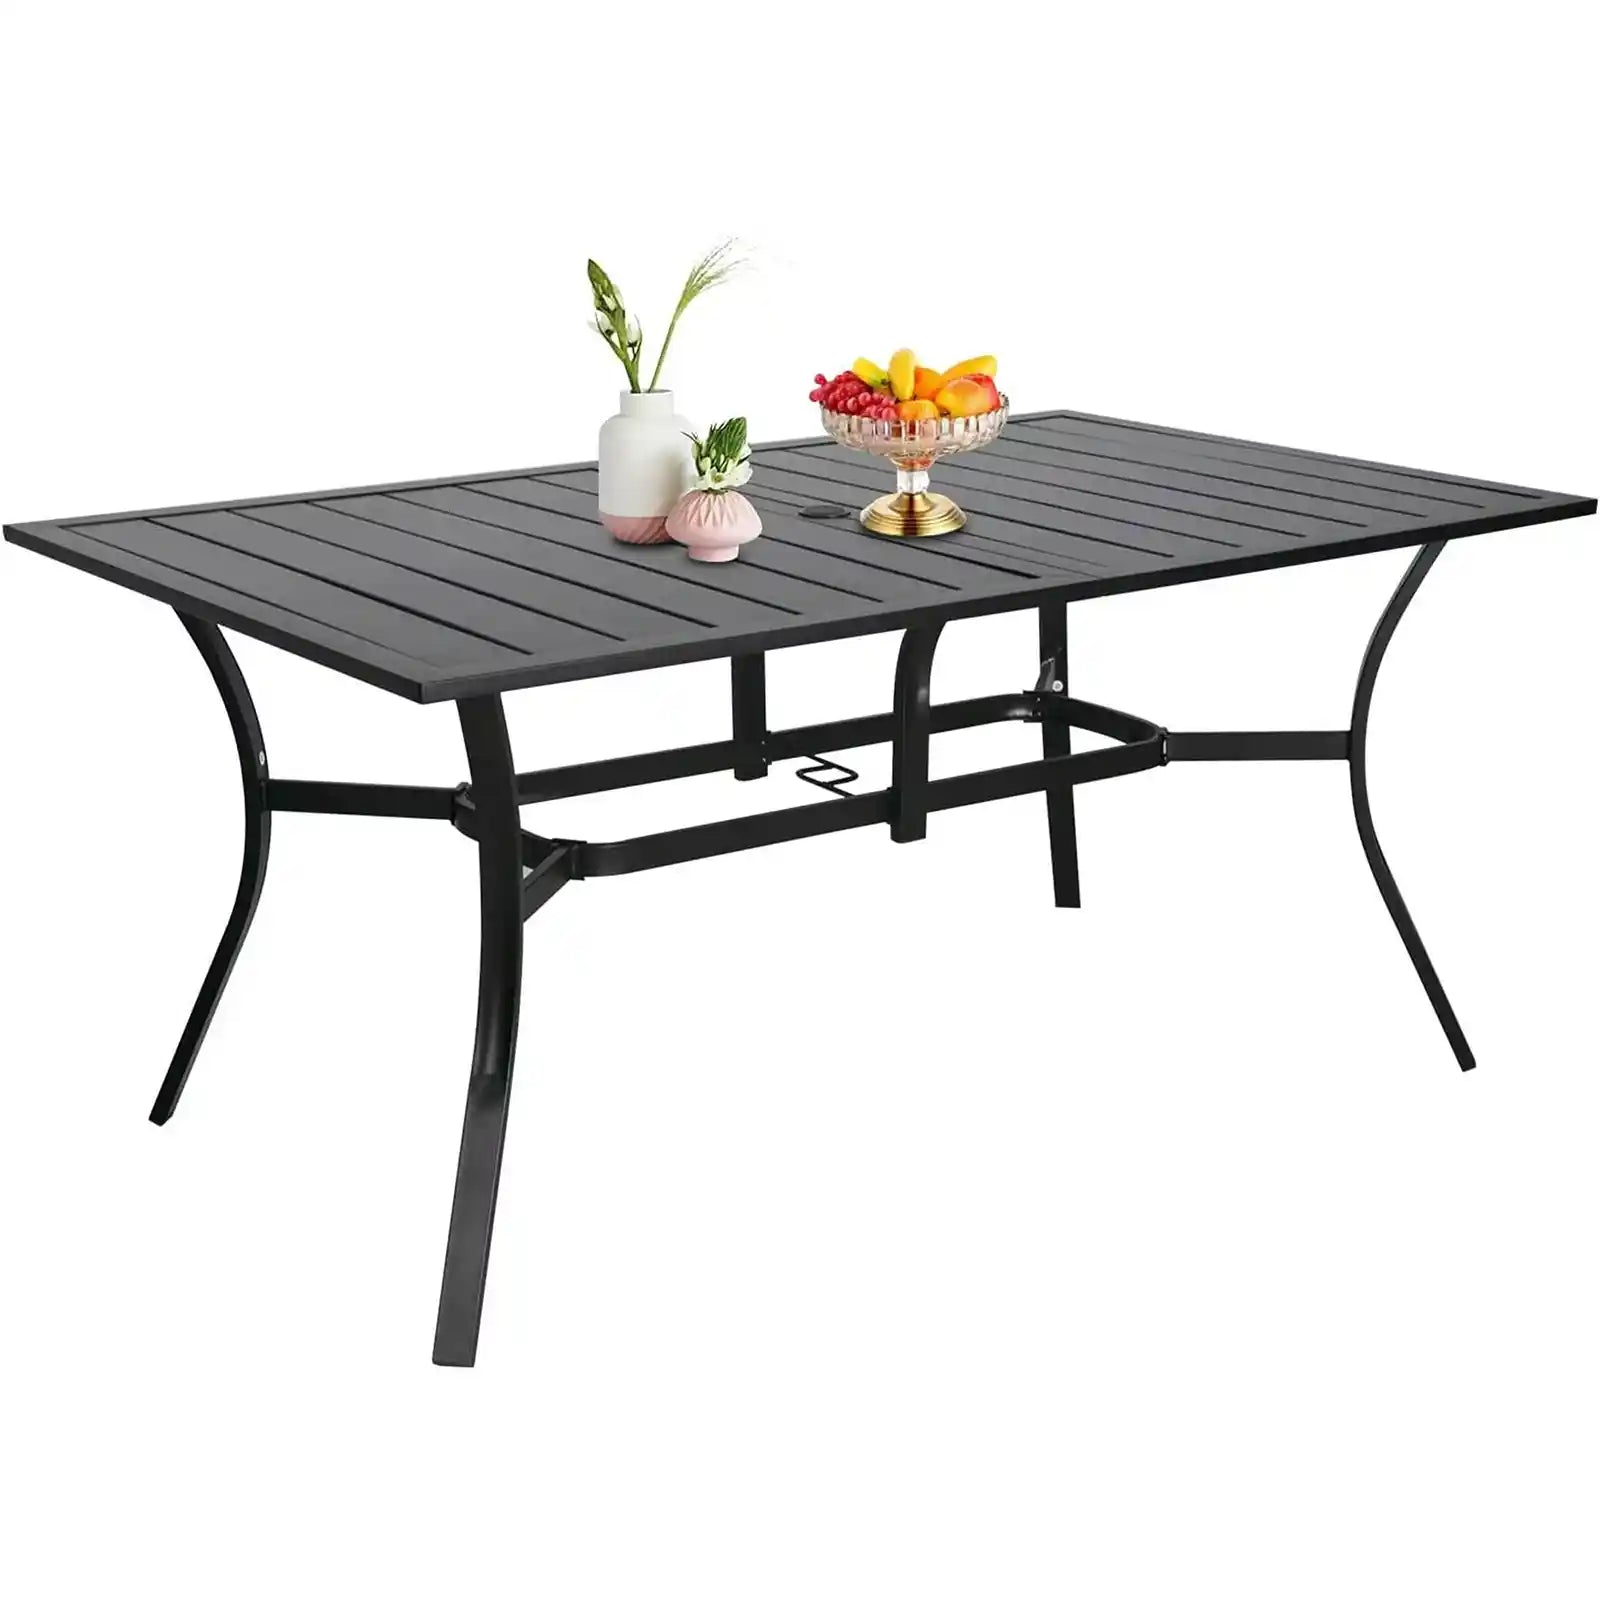 Mesa de comedor al aire libre, mesa rectangular de listones de acero para Patio para 6 personas con orificio para sombrilla 